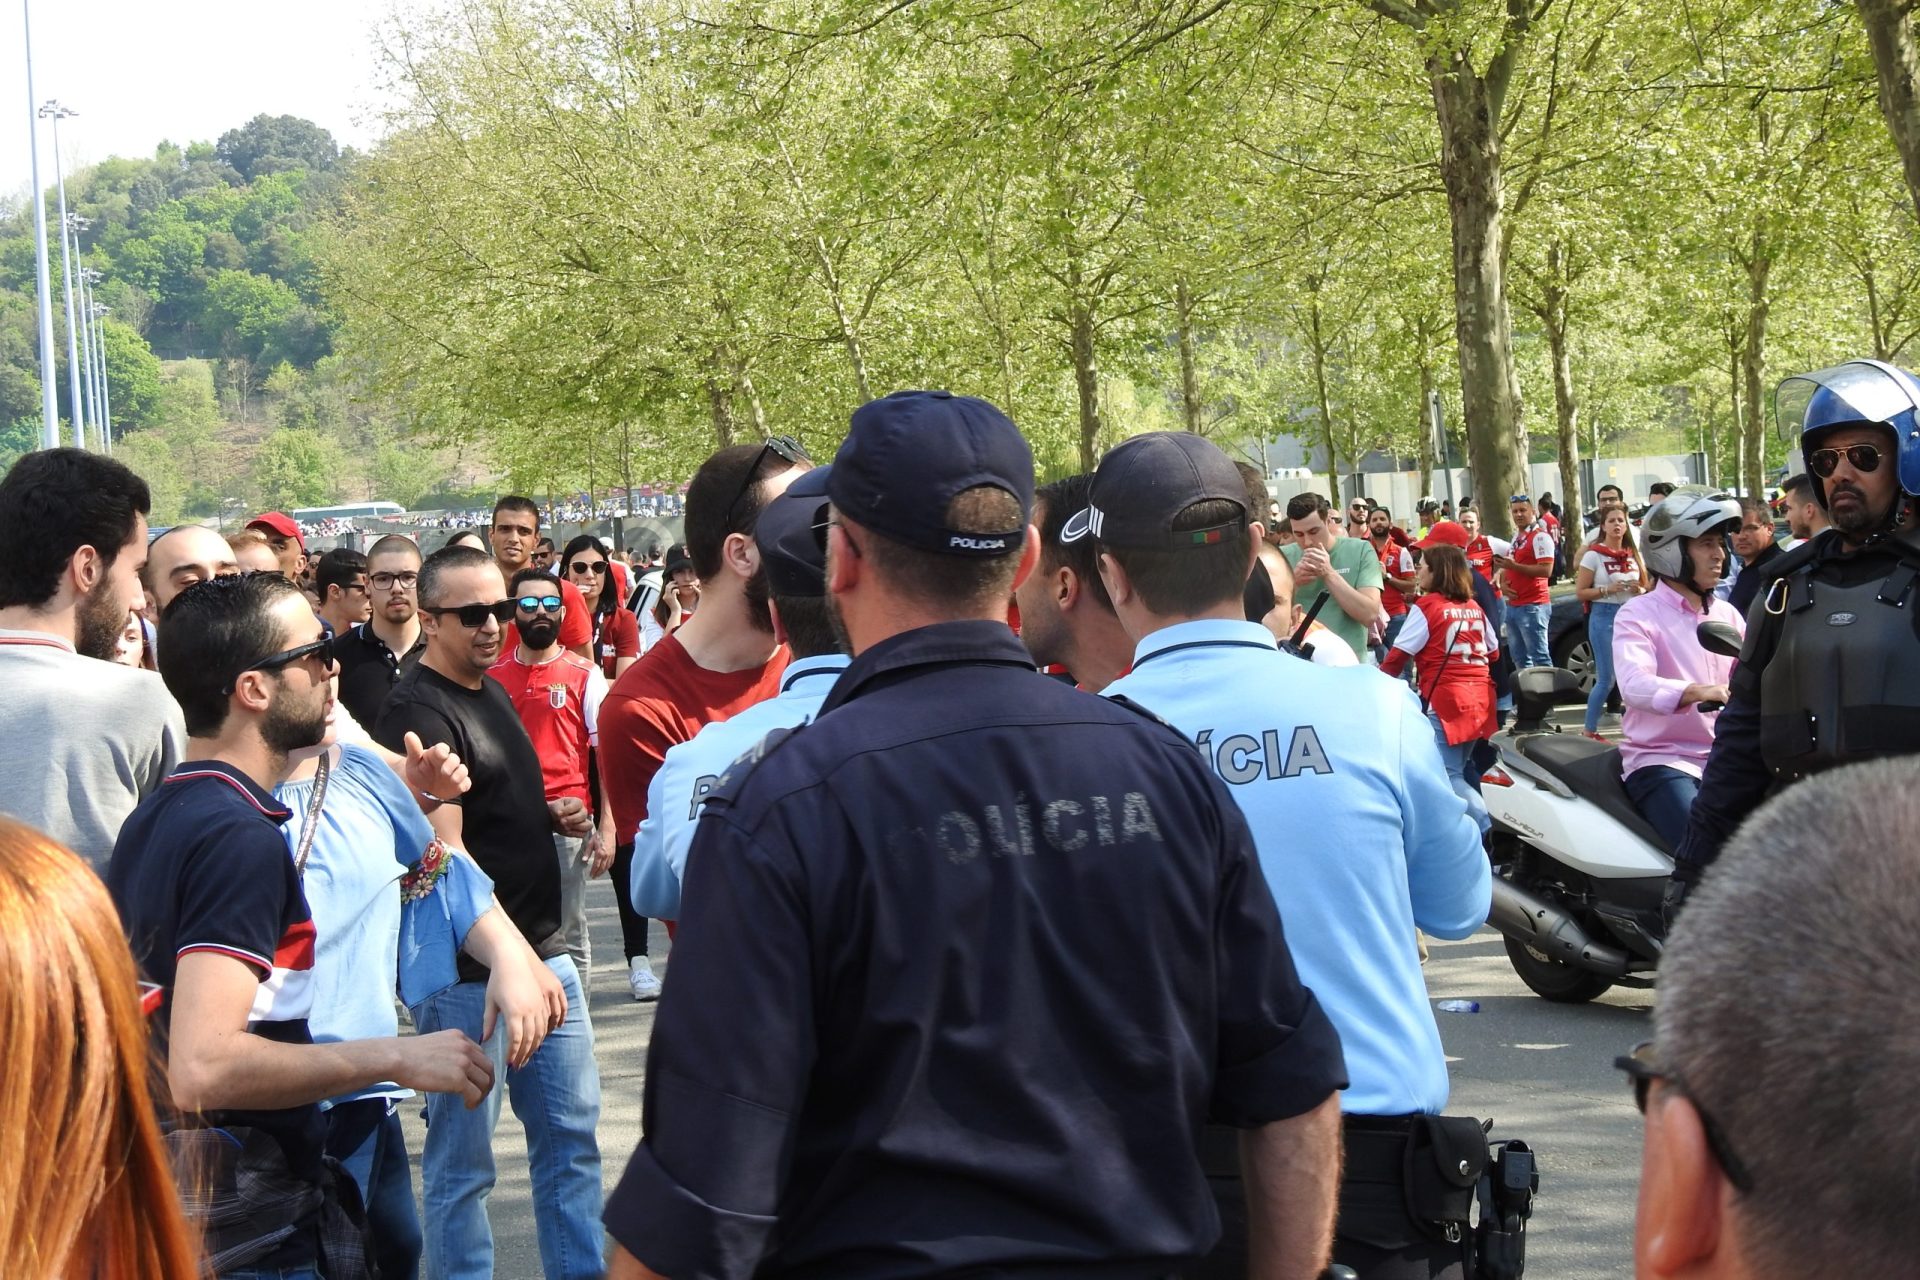 PSP de Braga faz carga sobre adeptos e agente insulta jornalista